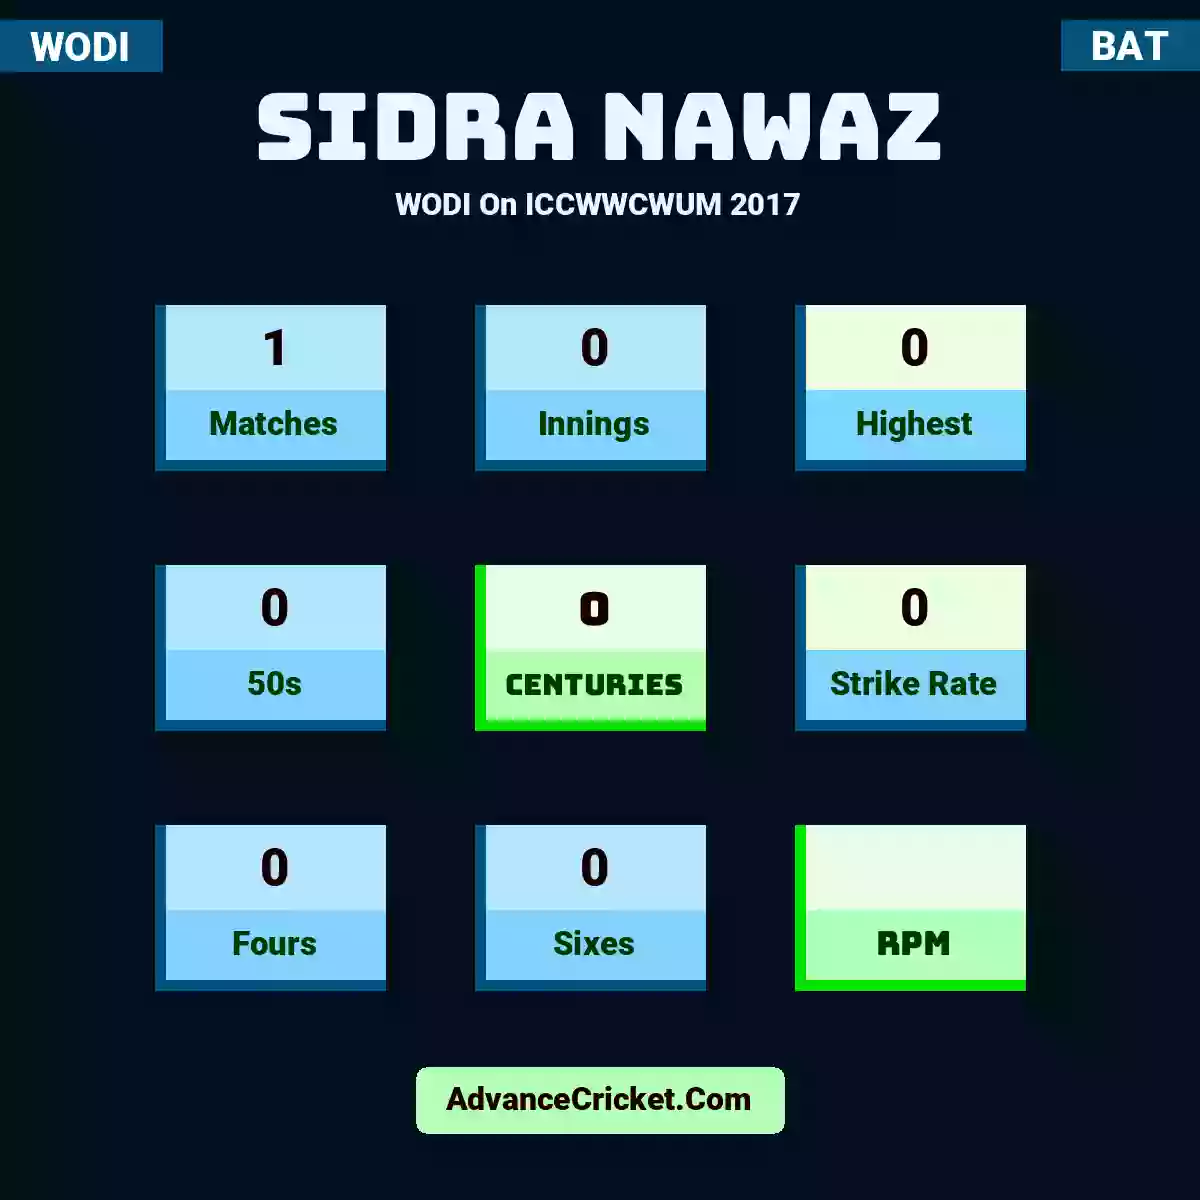 Sidra Nawaz WODI  On ICCWWCWUM 2017, Sidra Nawaz played 1 matches, scored 0 runs as highest, 0 half-centuries, and 0 centuries, with a strike rate of 0. S.Nawaz hit 0 fours and 0 sixes.